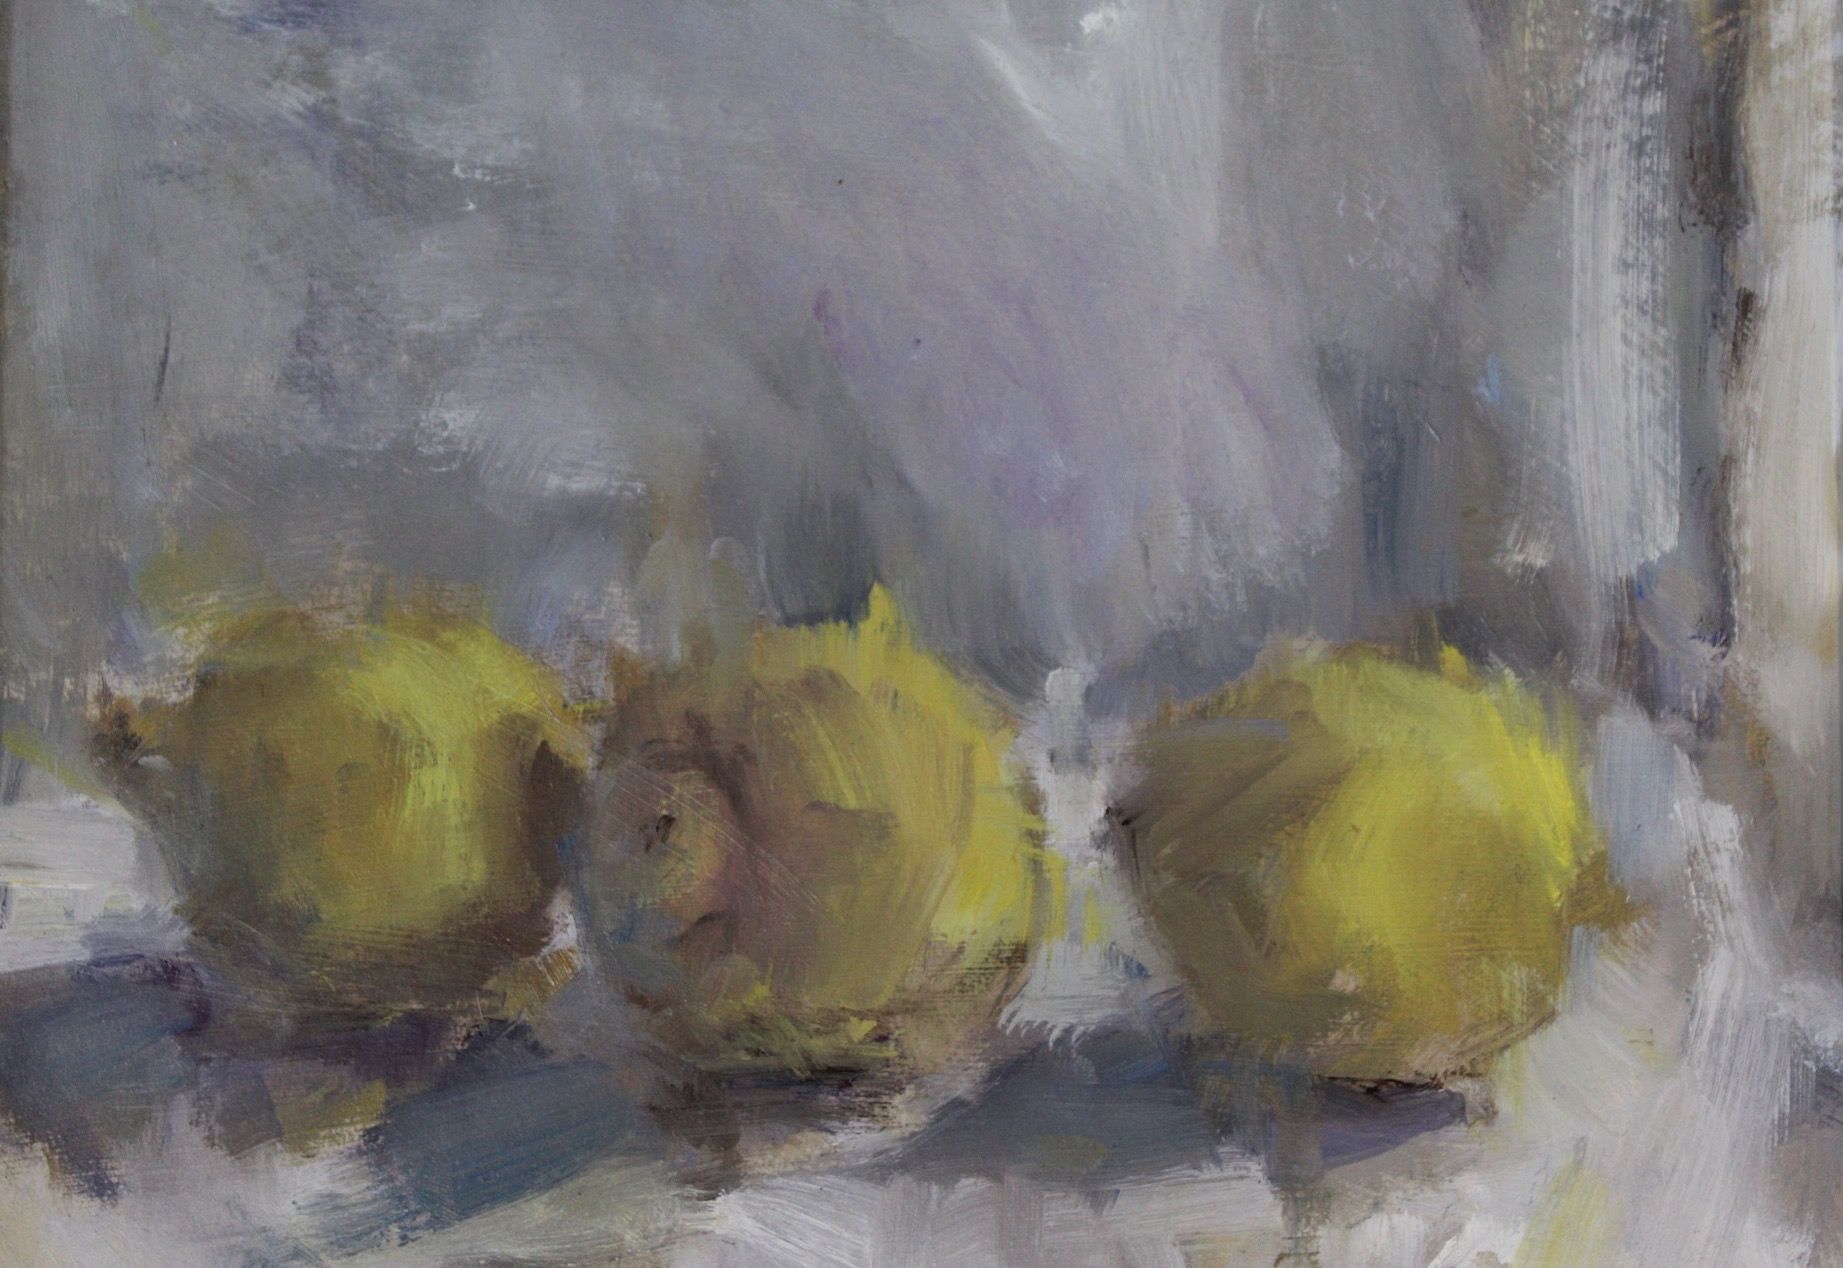 Three Lemons, for Sale by Jemma Powell